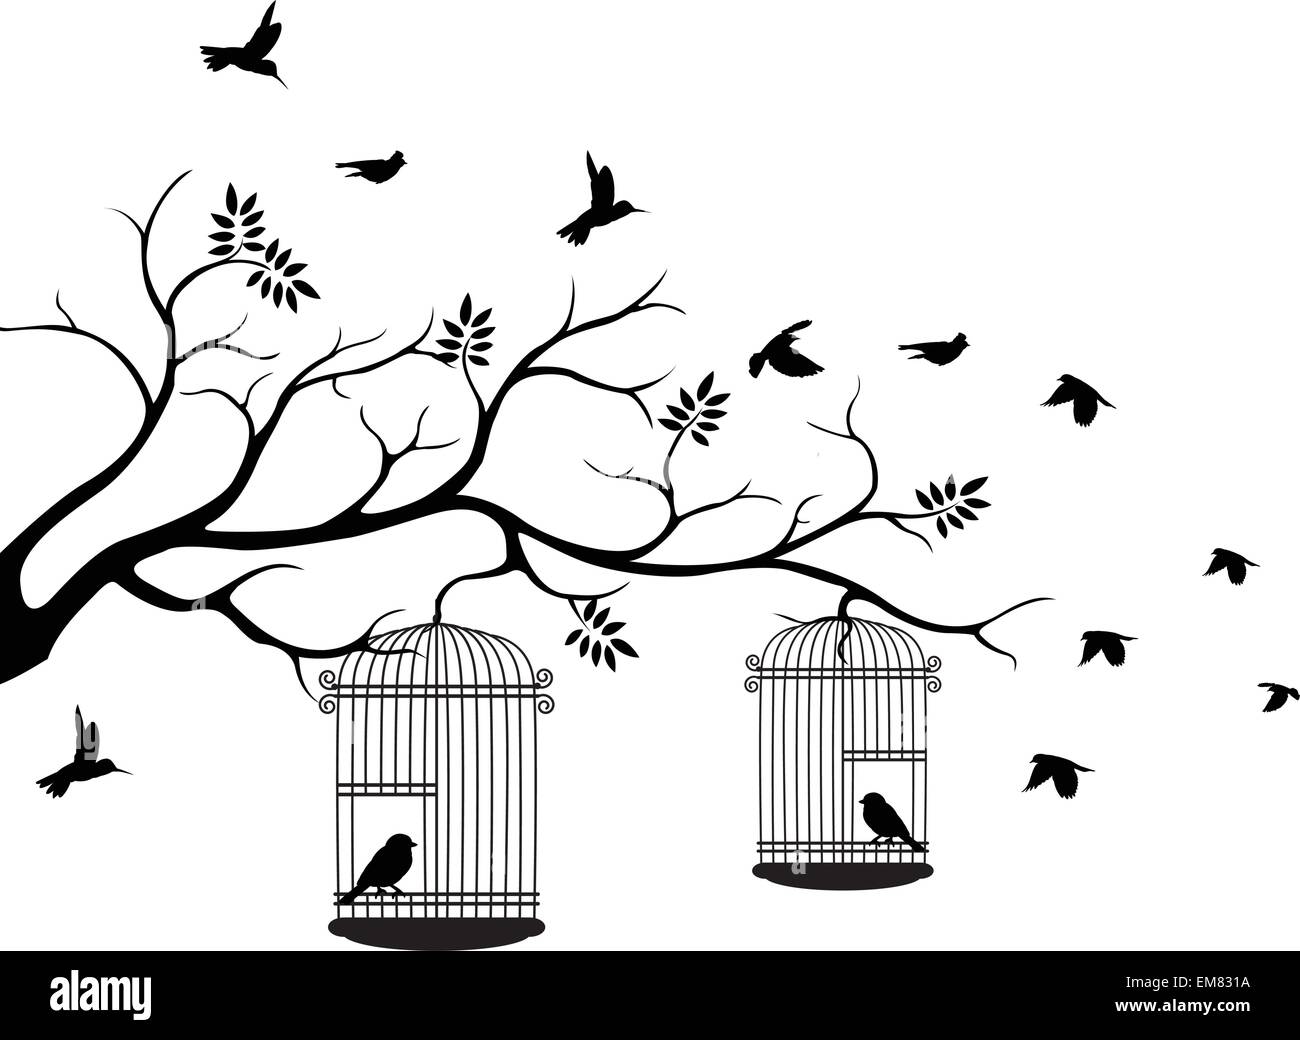 Silueta de árbol con pájaros volando Imagen Vector de stock - Alamy